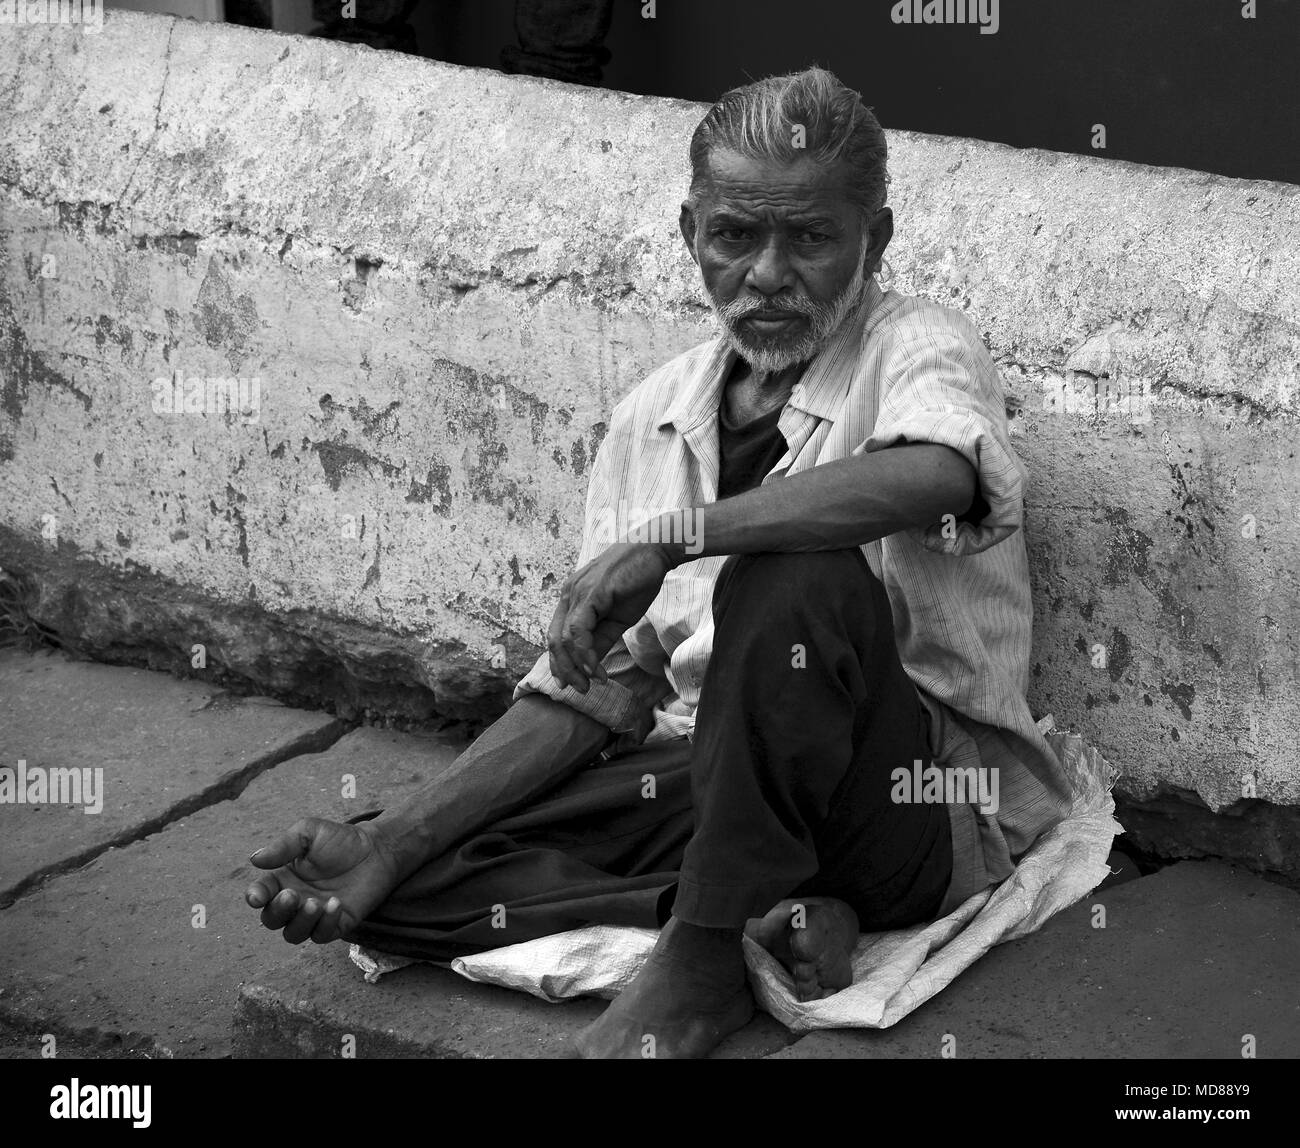 Hombre mendigando en las calles de Mumbai, India Foto de stock